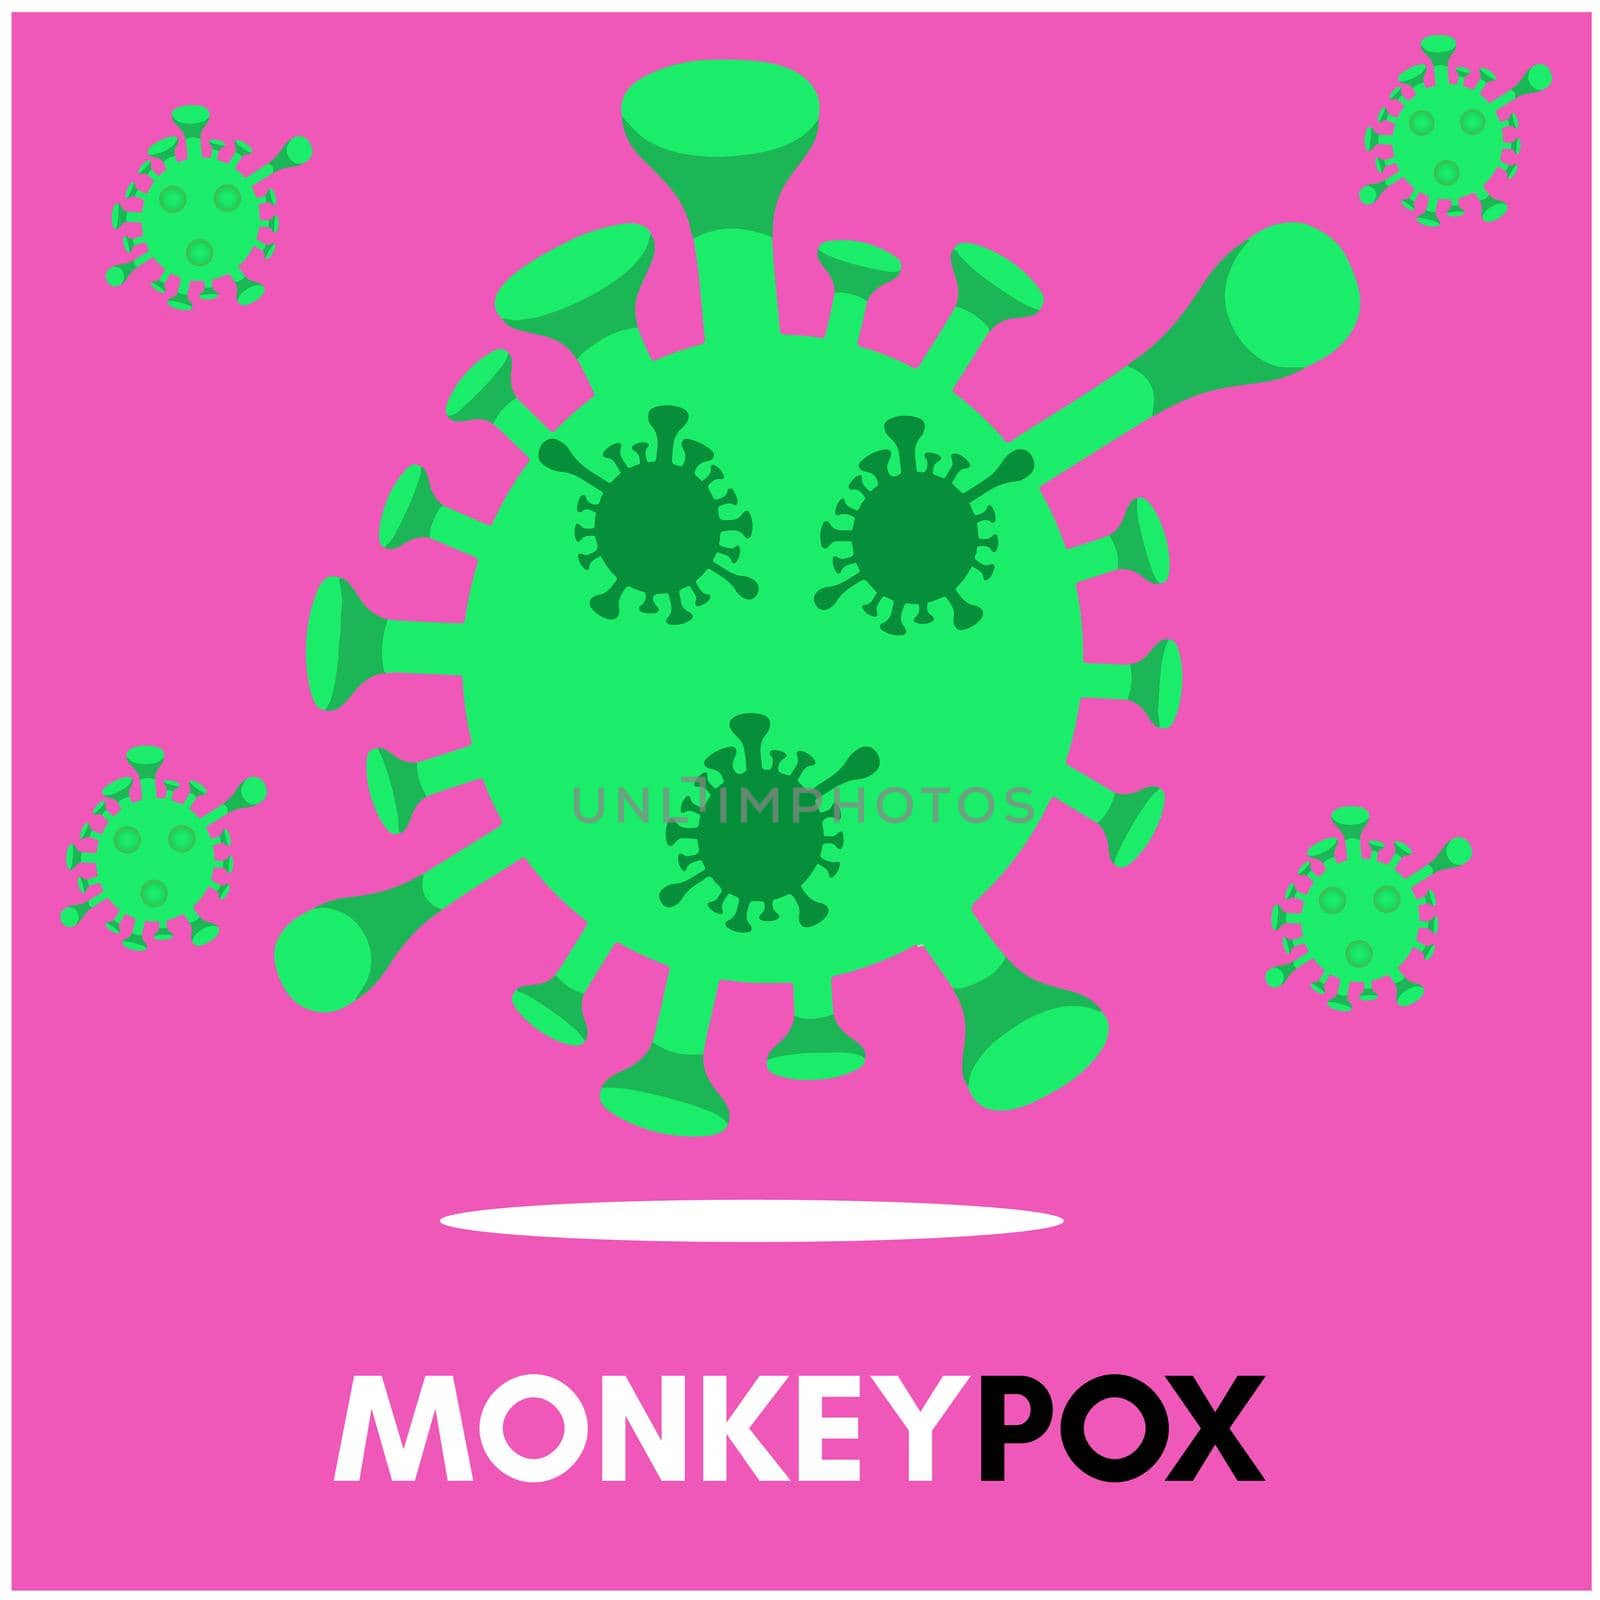 Monkeypox virus illustration, Monkeypox concept, Monkeypox virus outbreak pandemic design with microscopic view background by isaiphoto